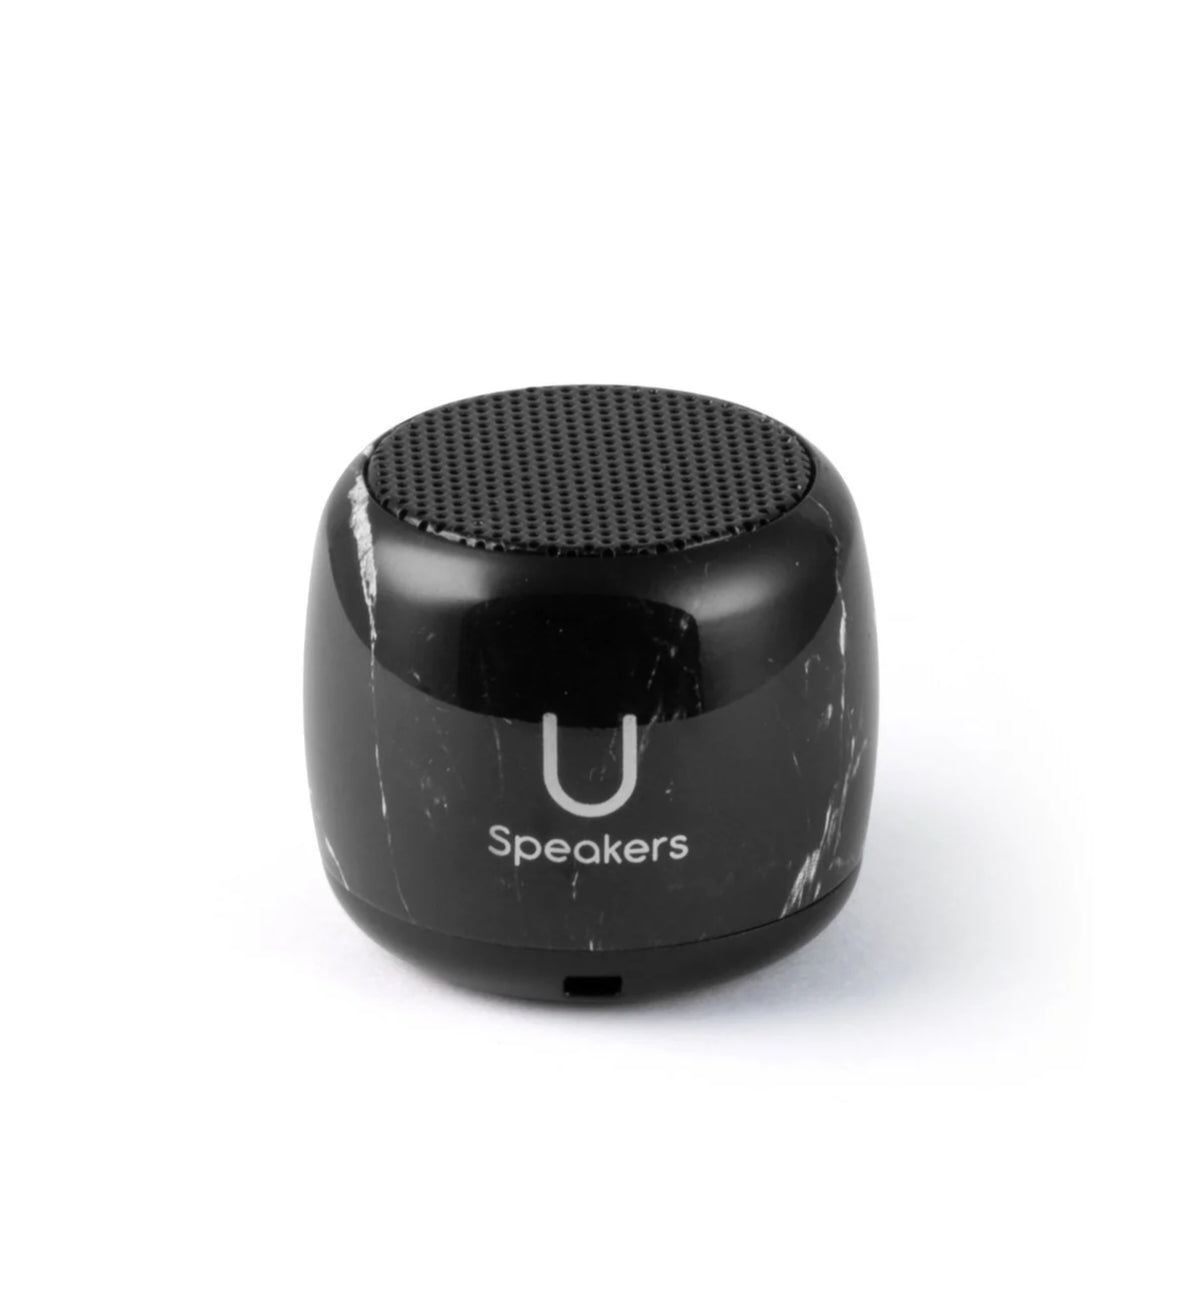 U Micro Speaker (color options)